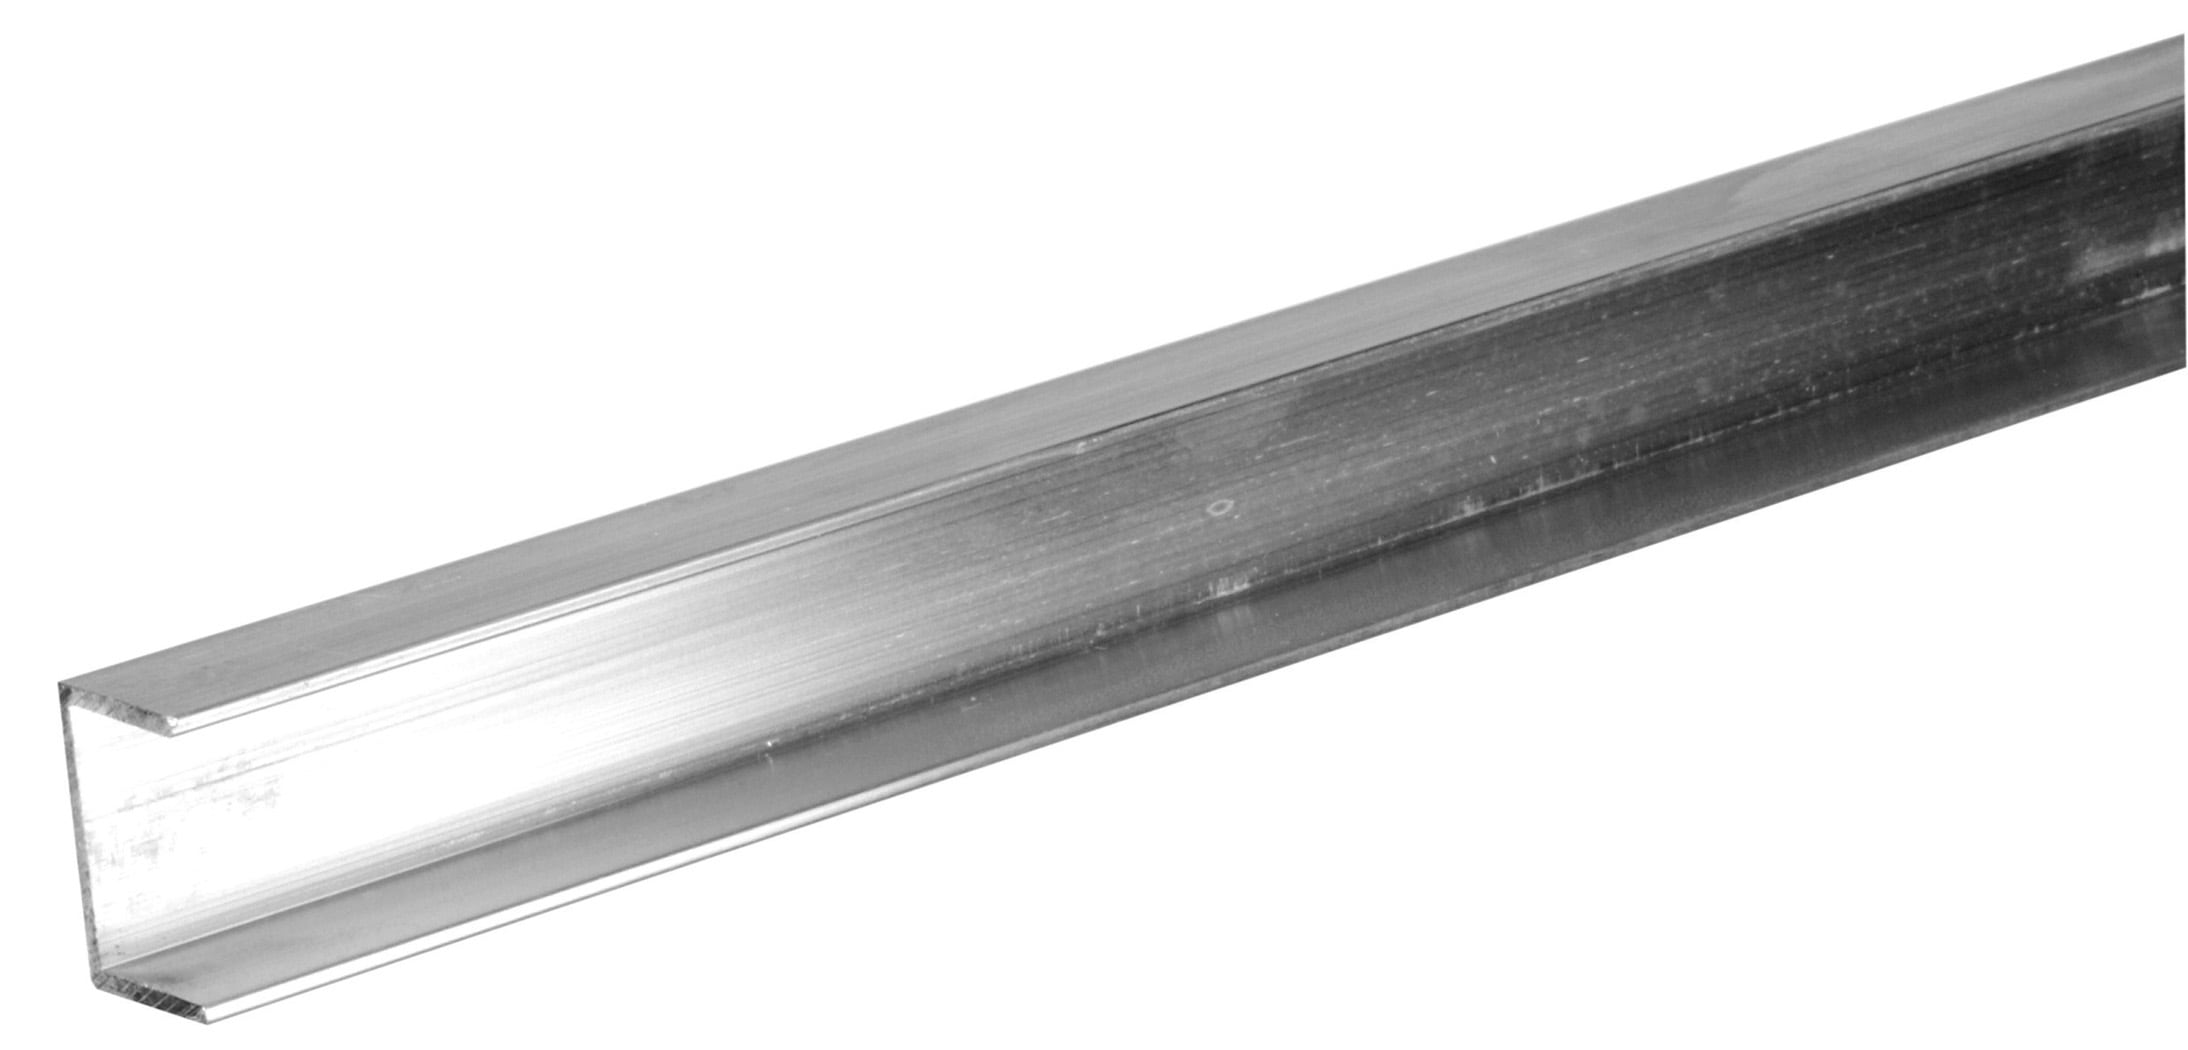 Ace Small Zinc-Plated Silver Steel 0.75 in. L S-Hook 15 lb 8 pk